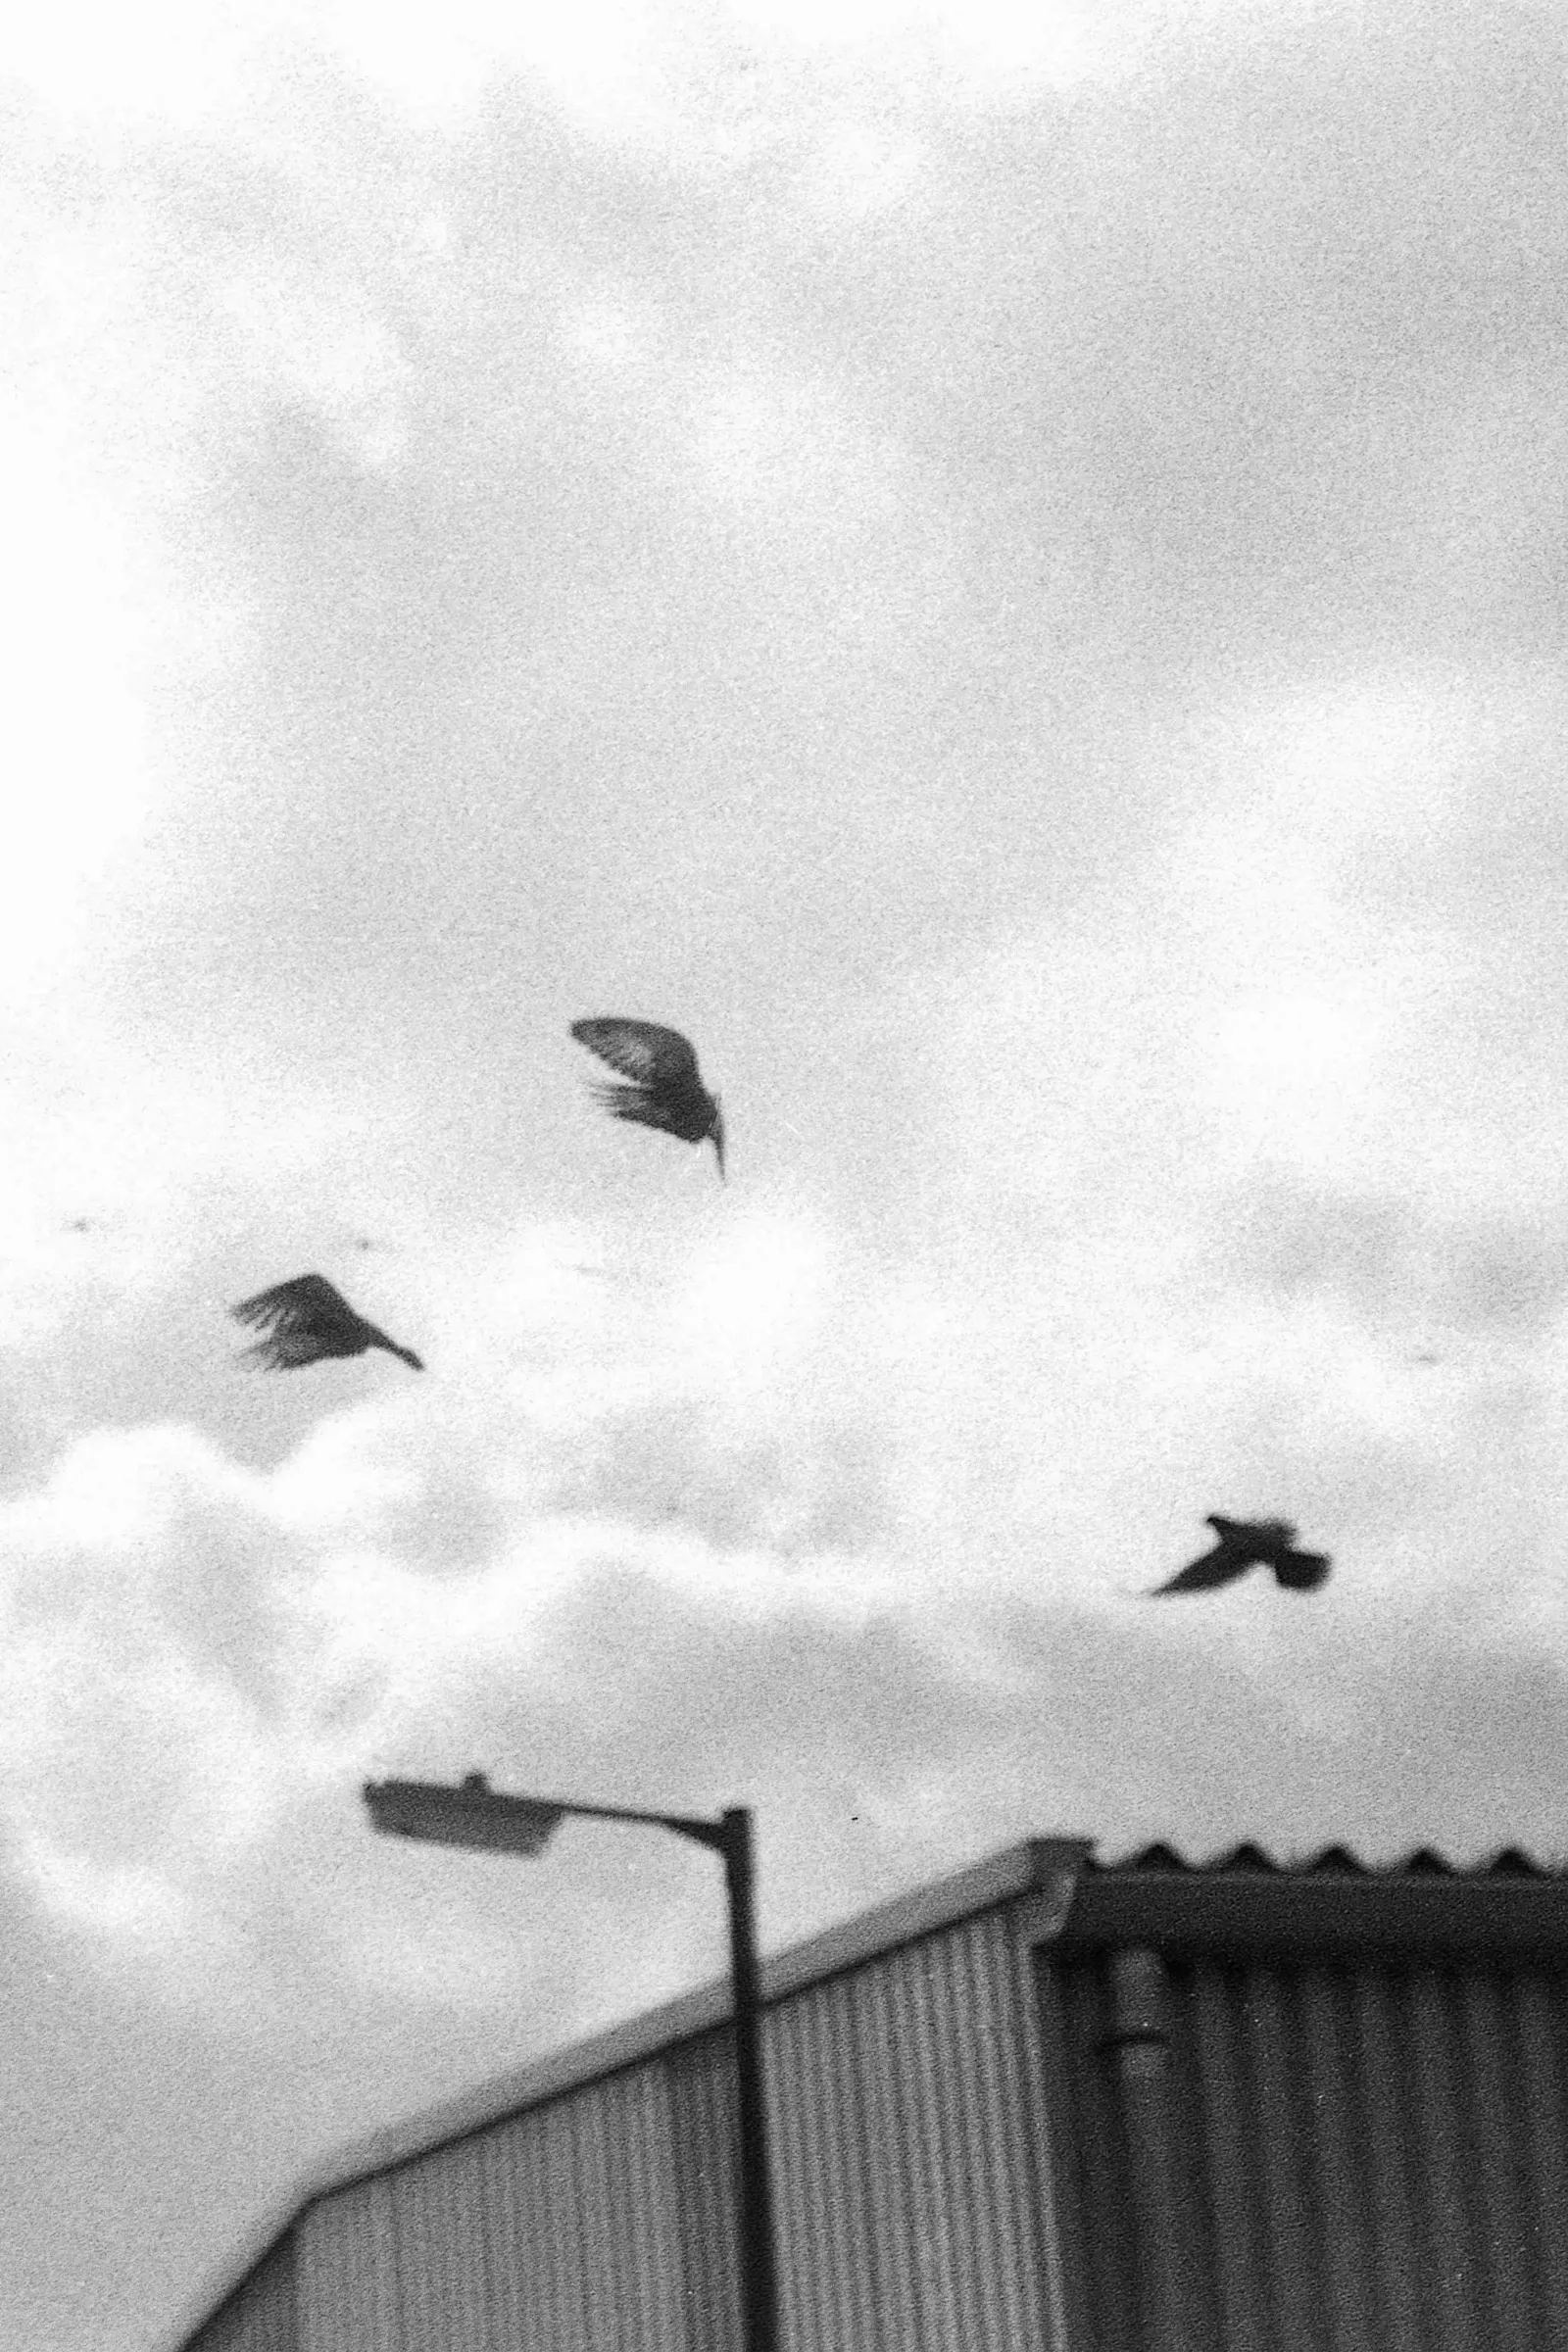 Birds in flight in a grainy photo